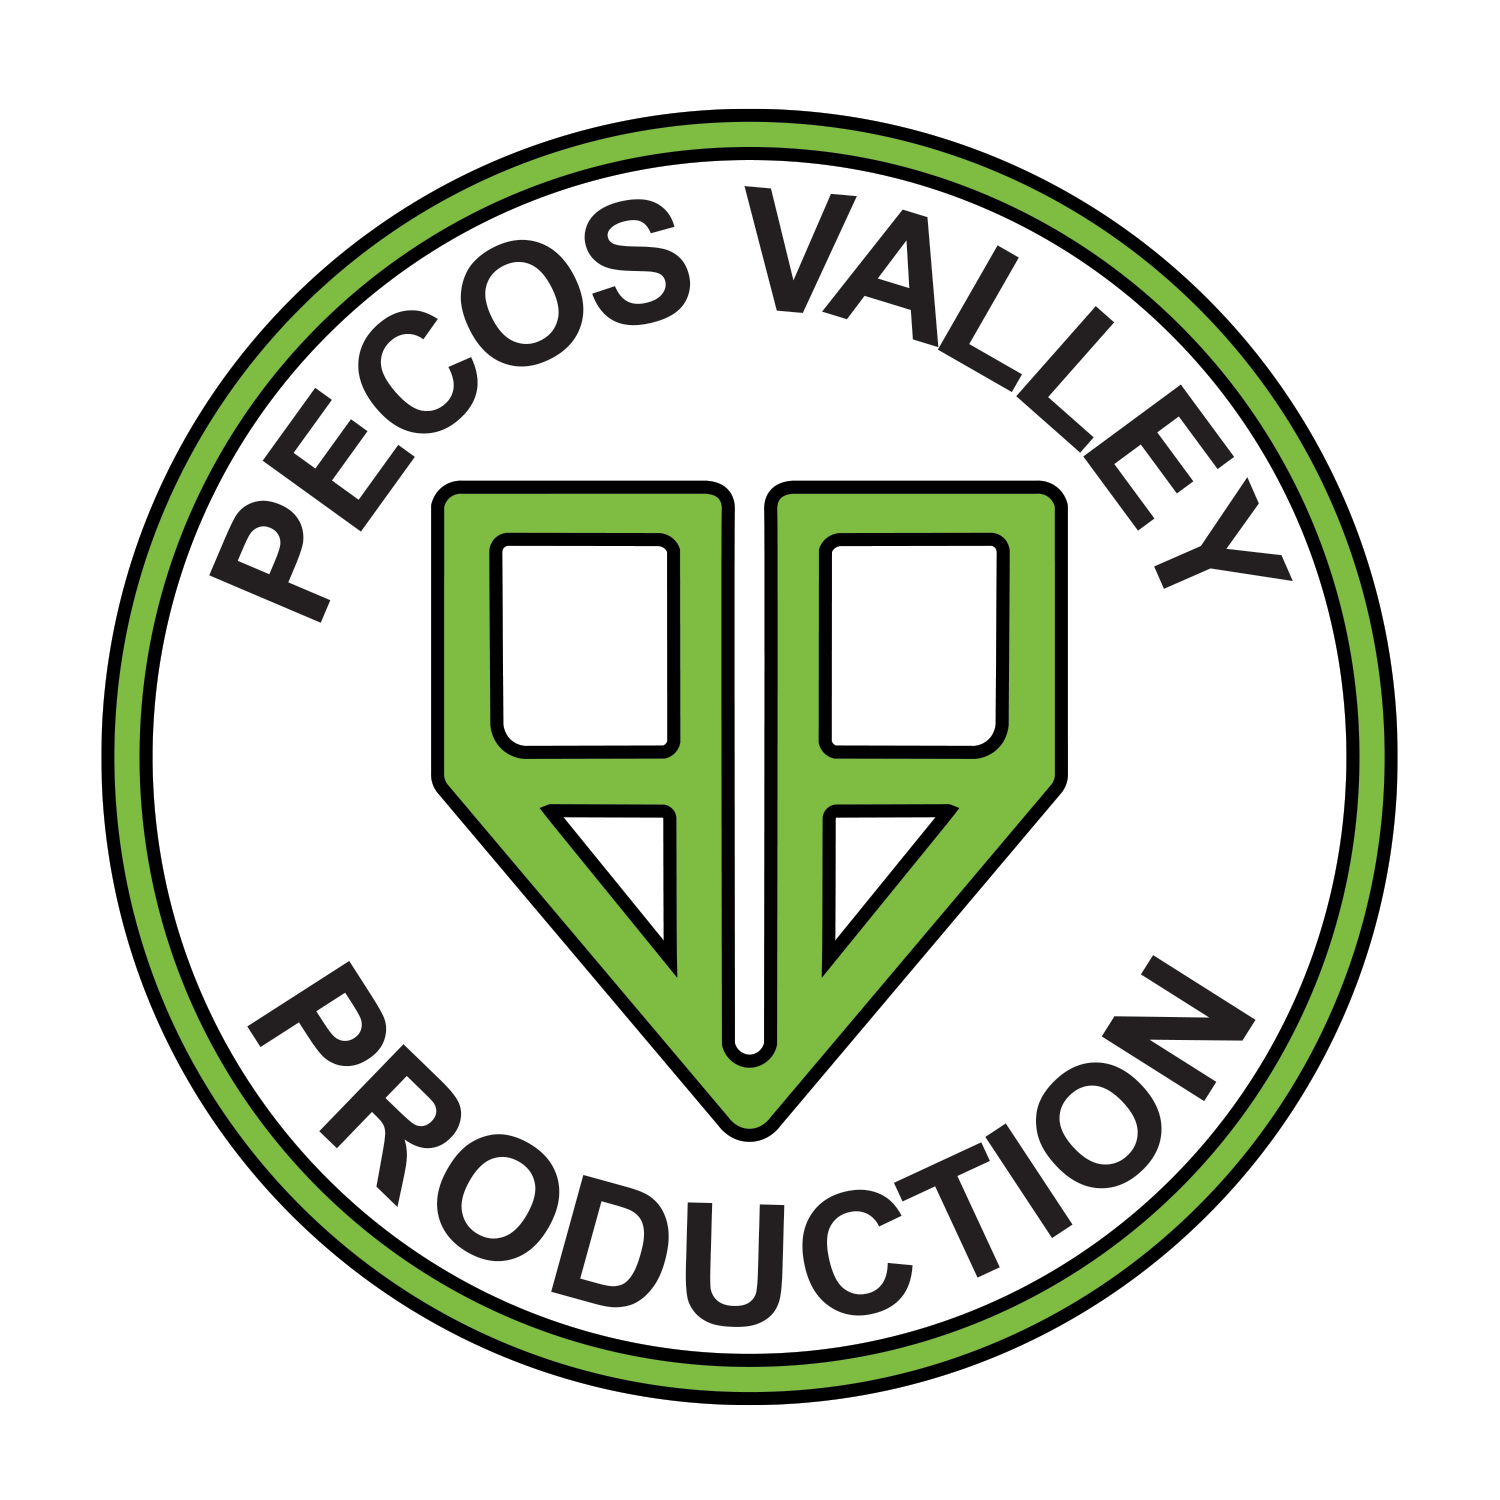 Pecos Valley Production - Las Cruces logo